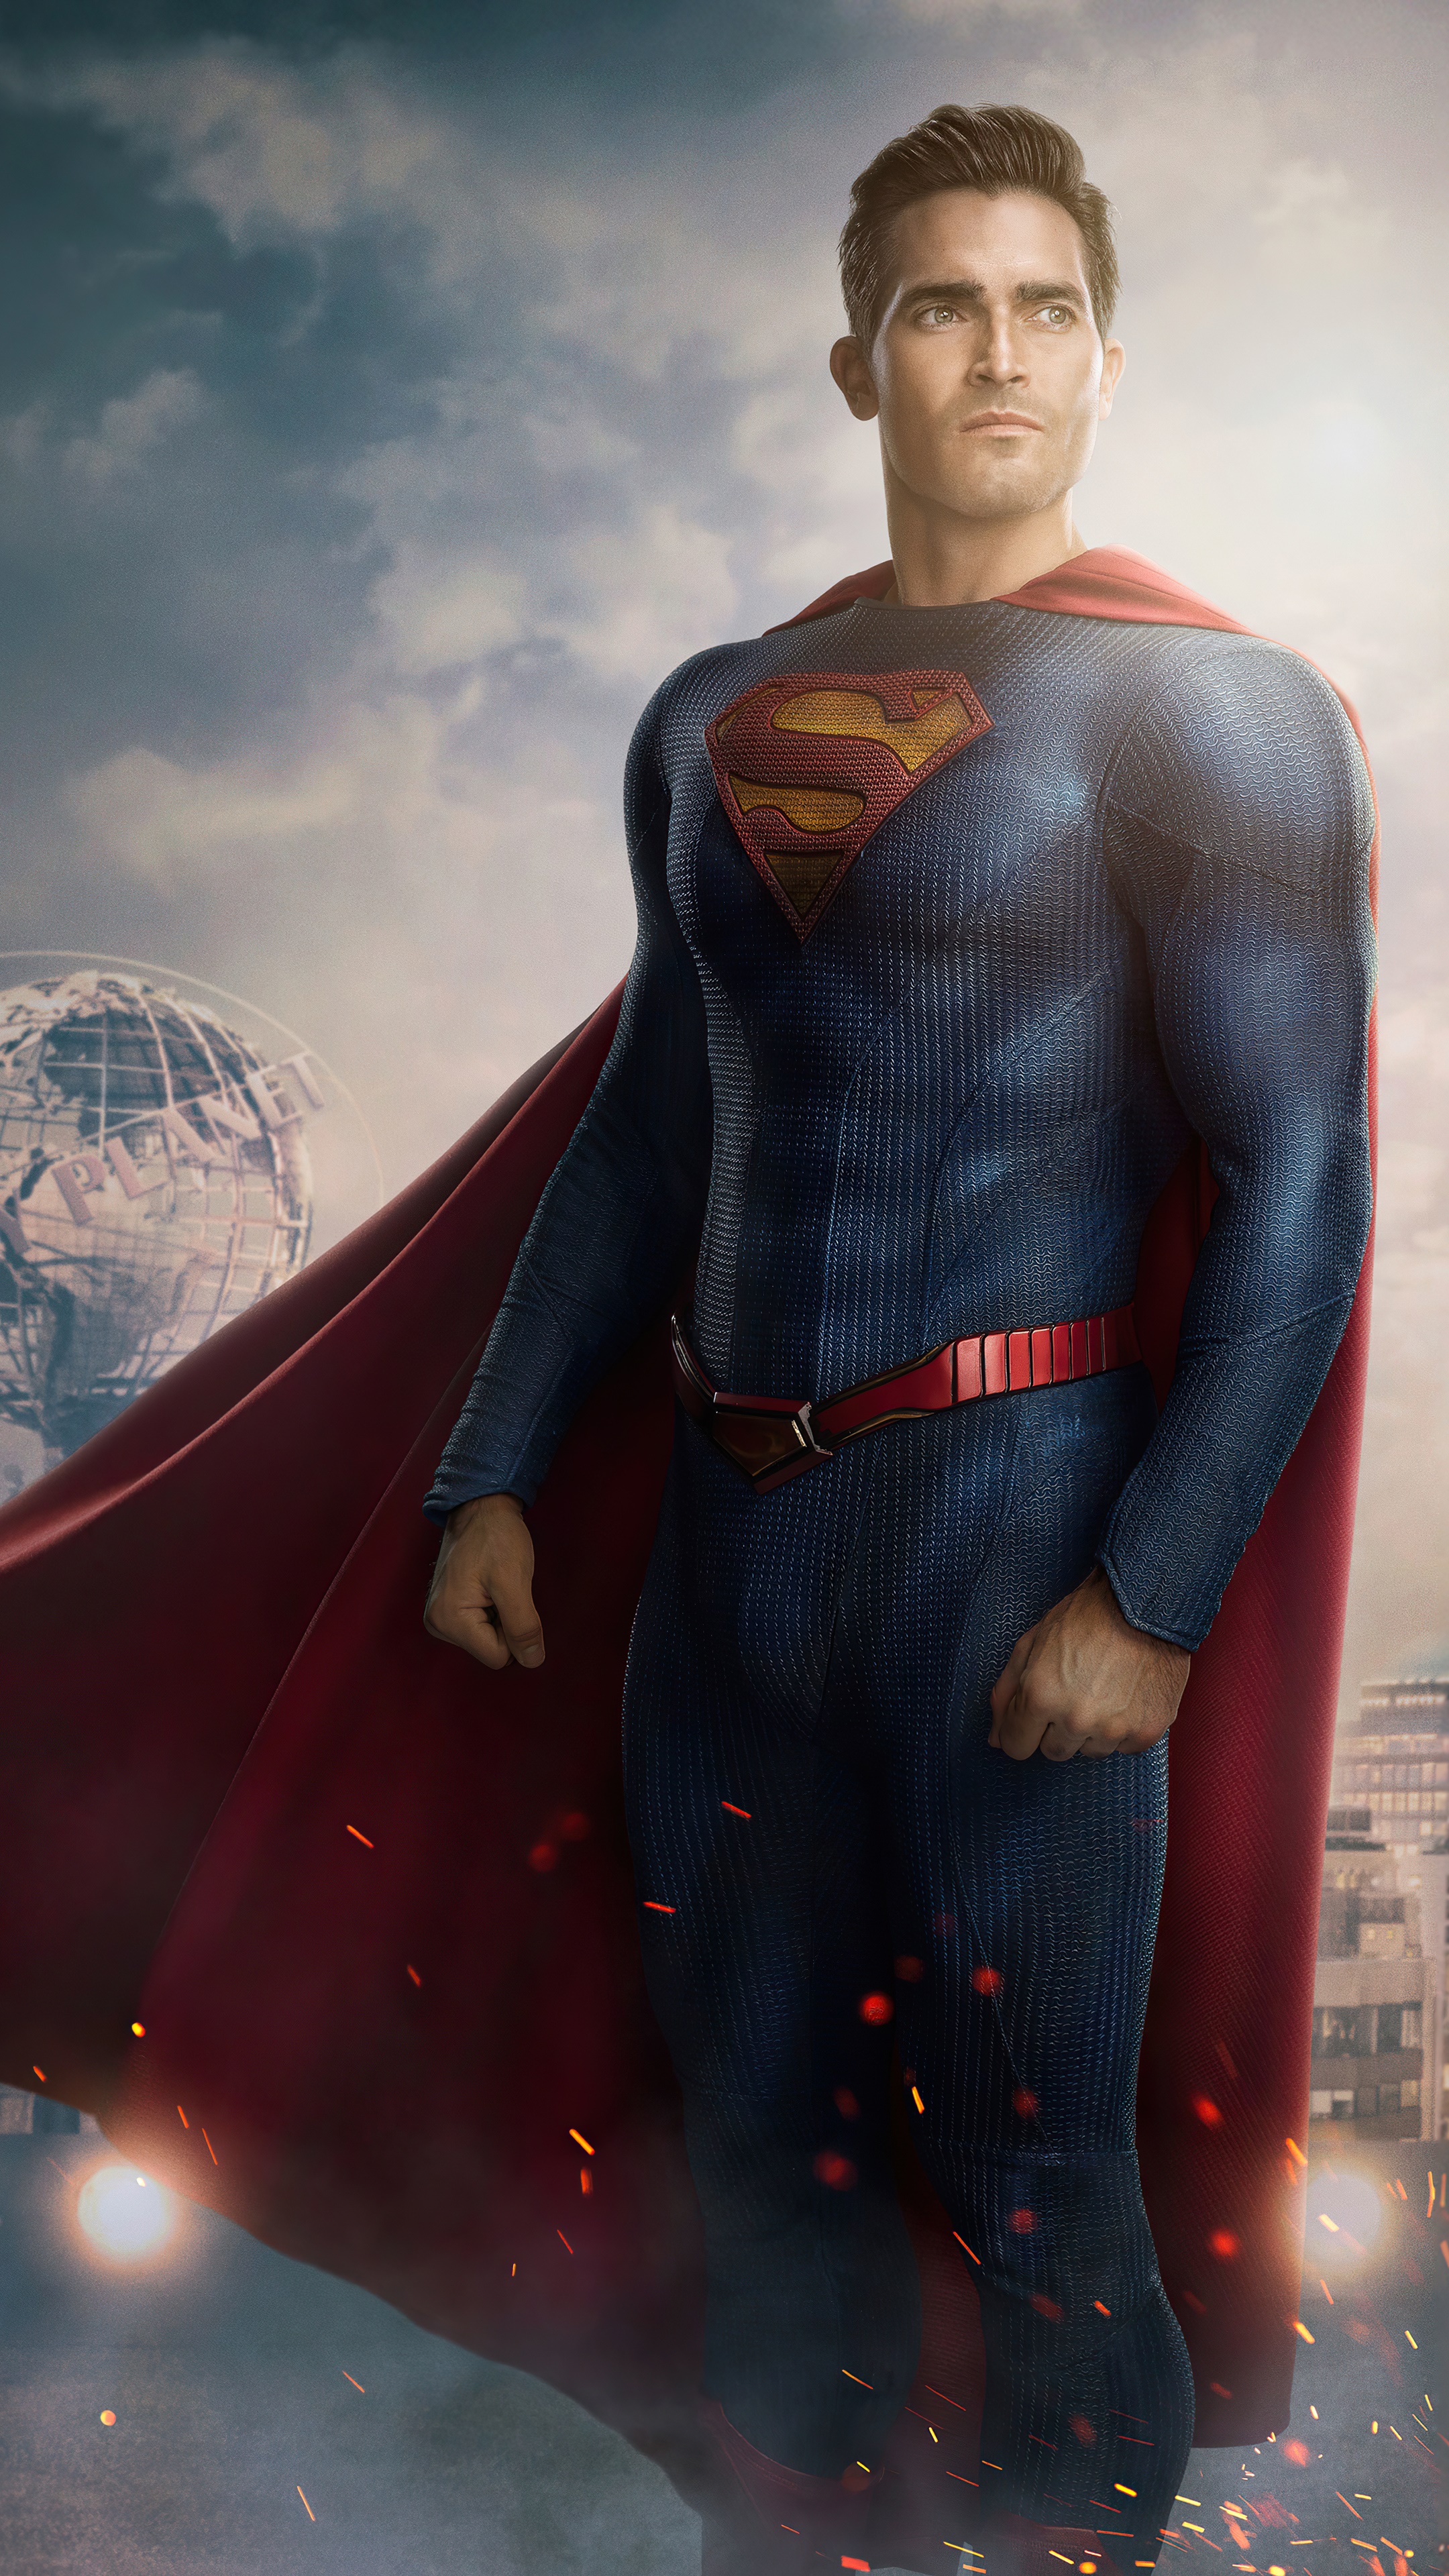 Superman and lois k superman dc ics tyler hoechlin superman and lois tv show